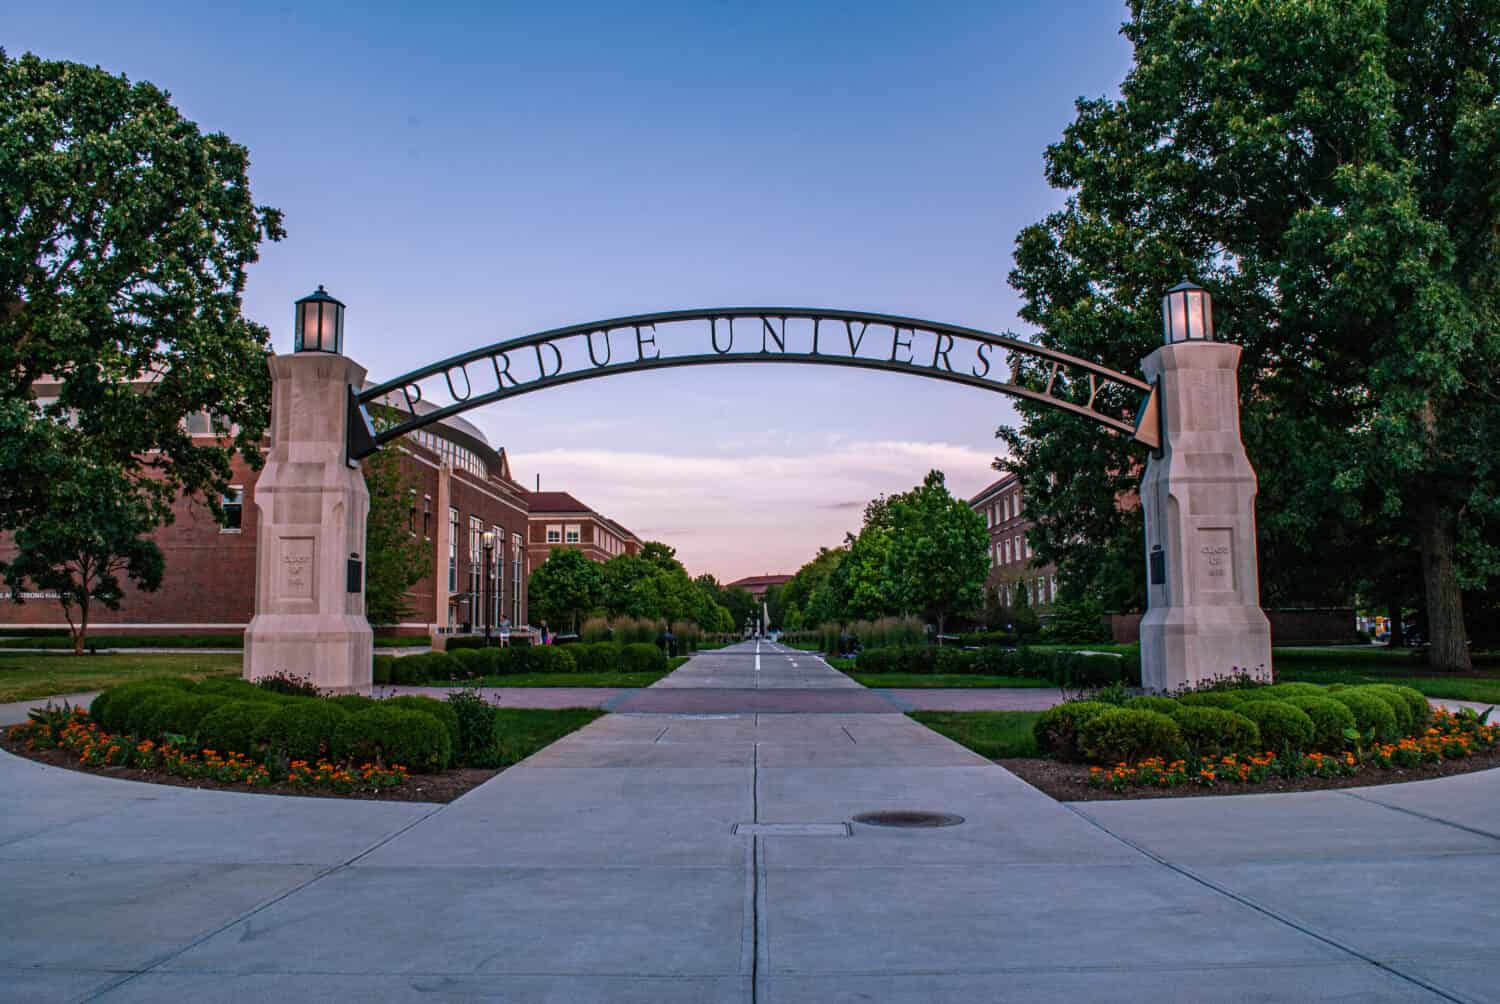 Purdue University archway entrance,IN 